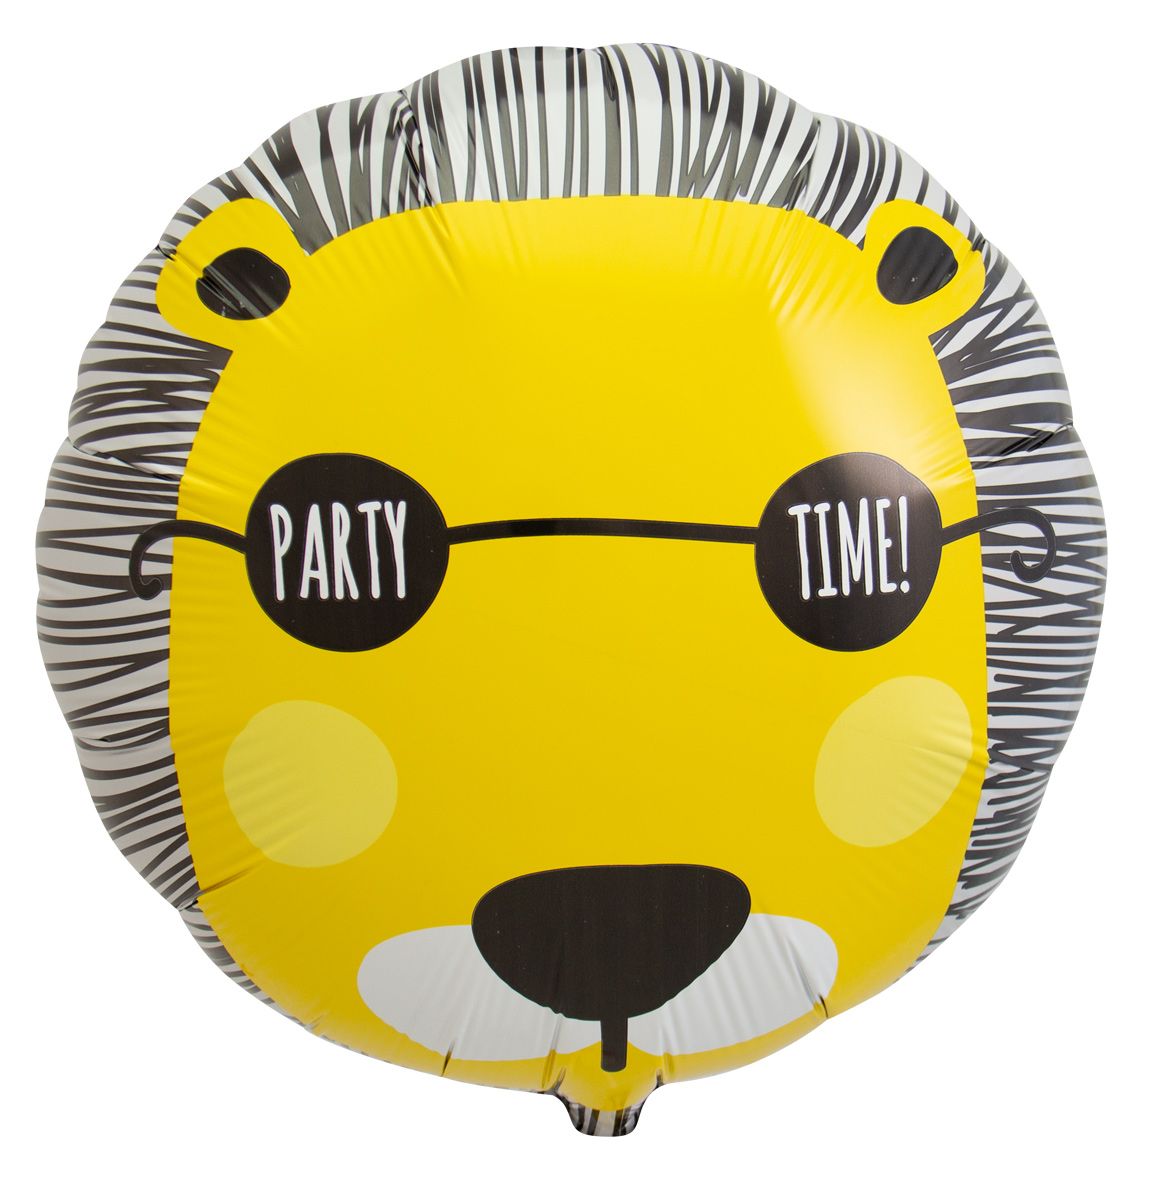 Leeuw party time folieballon